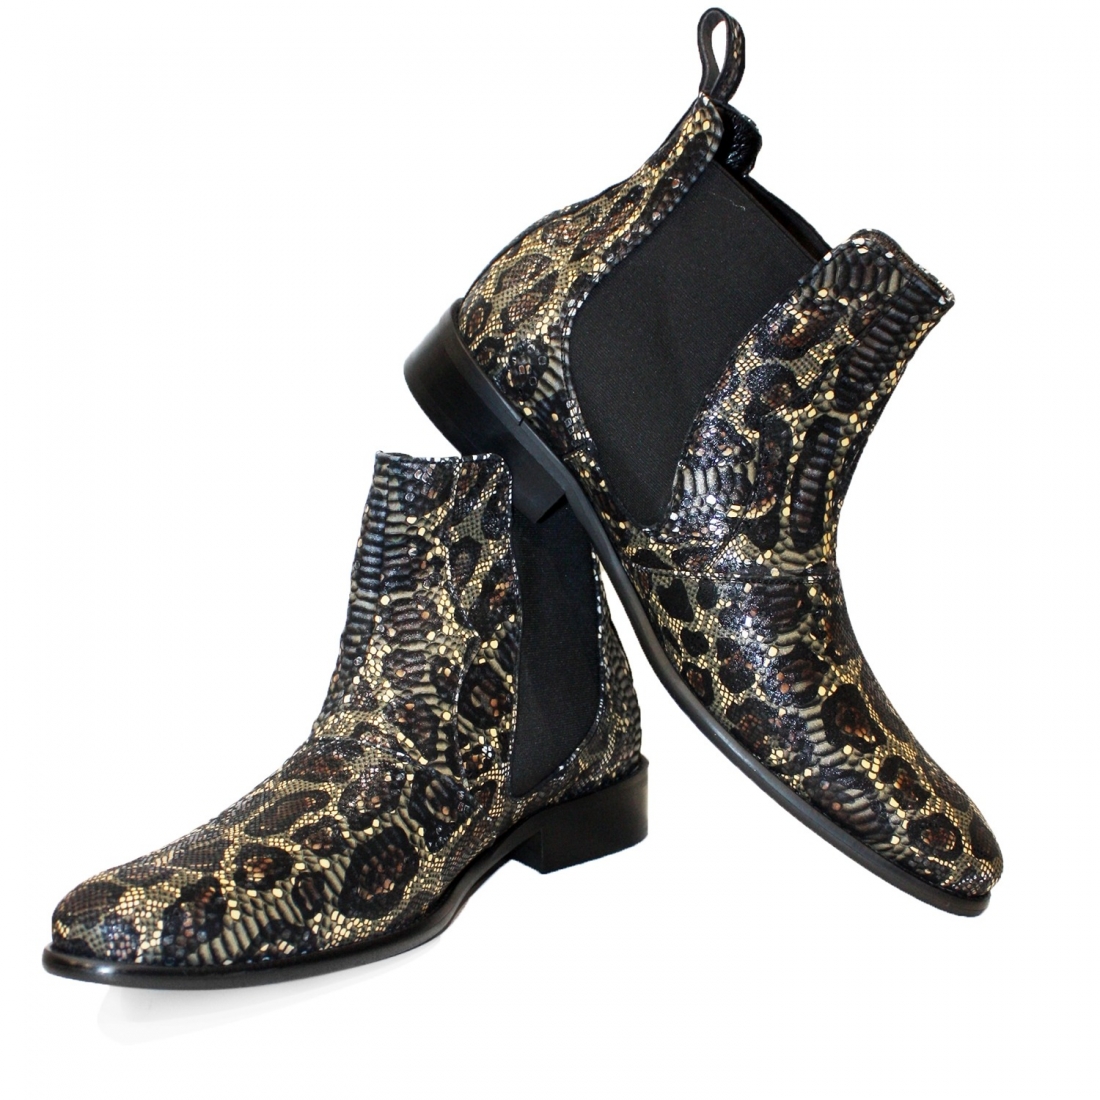 Modello Pumtello - Chelsea Boots - Handmade Colorful Italian Leather Shoes